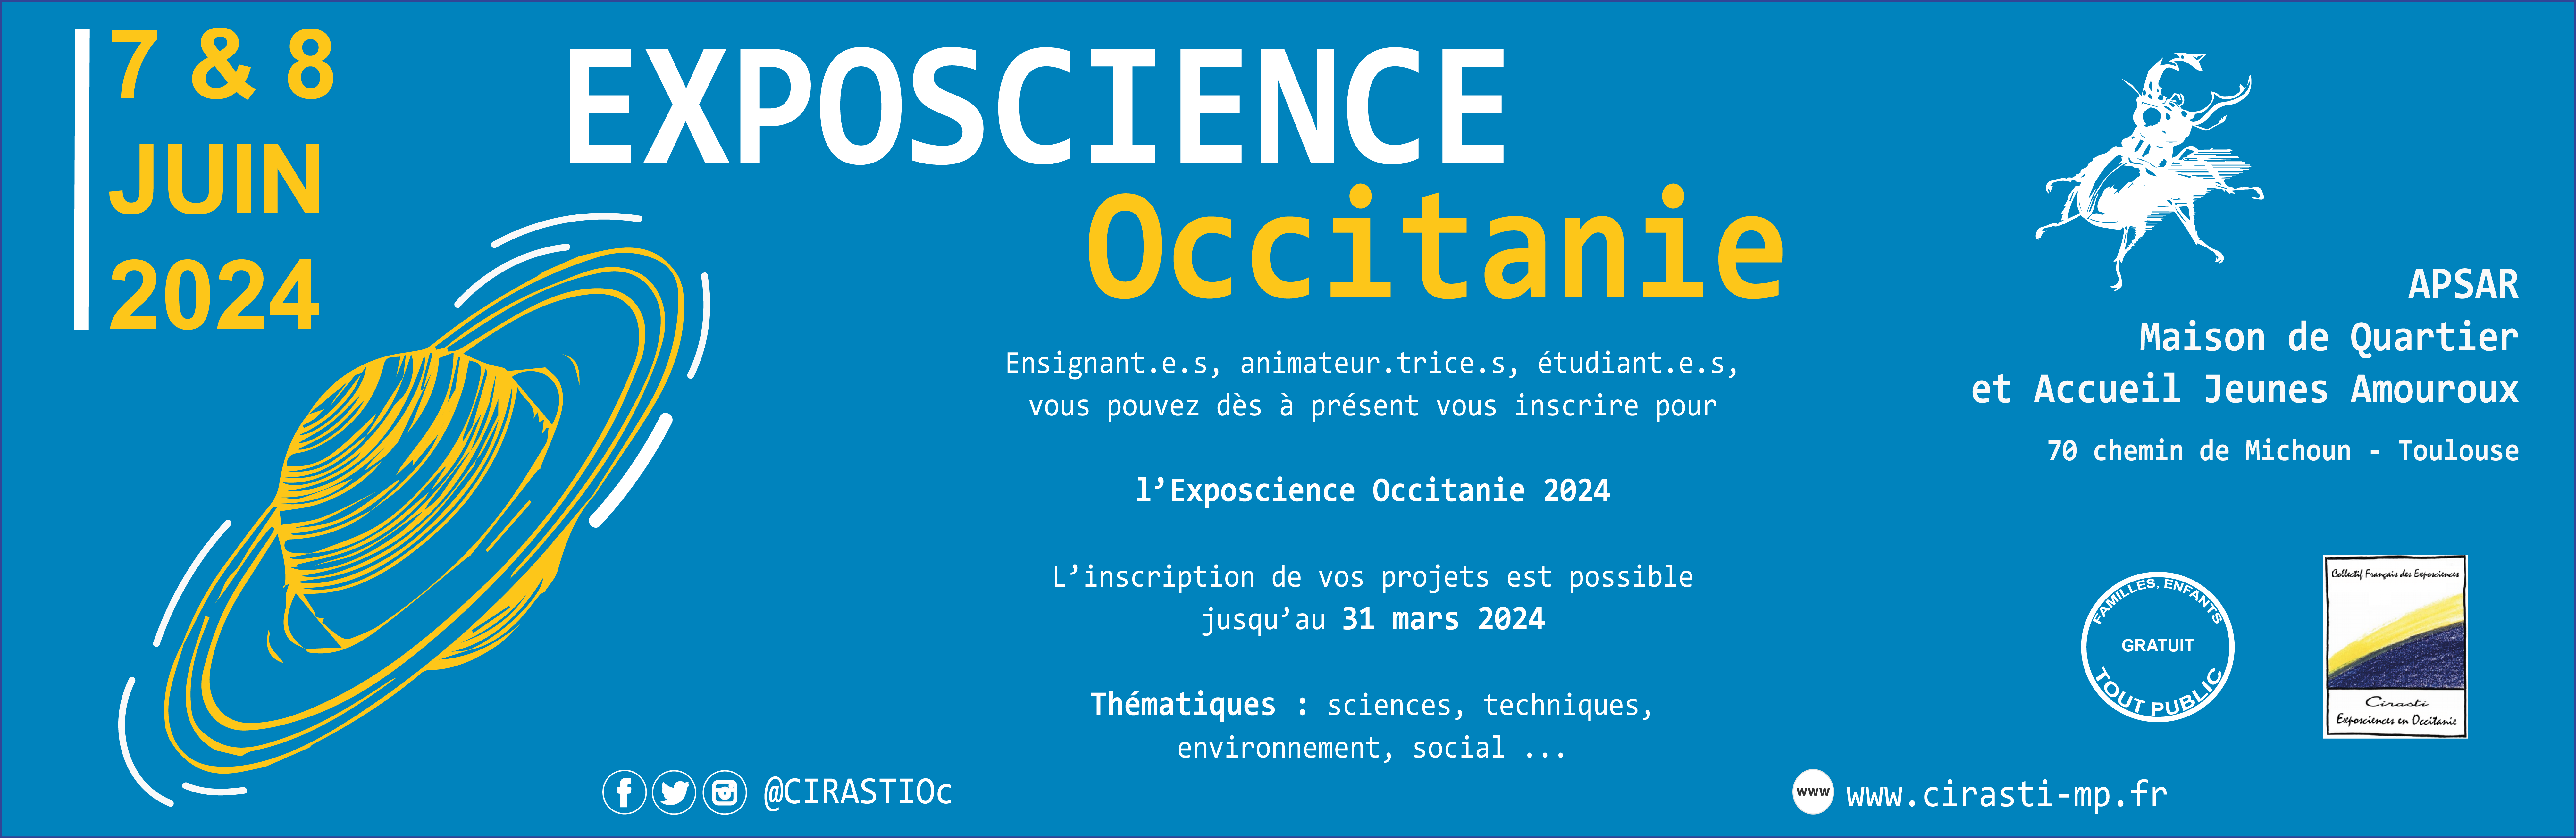 Exposcience Occitanie 2024